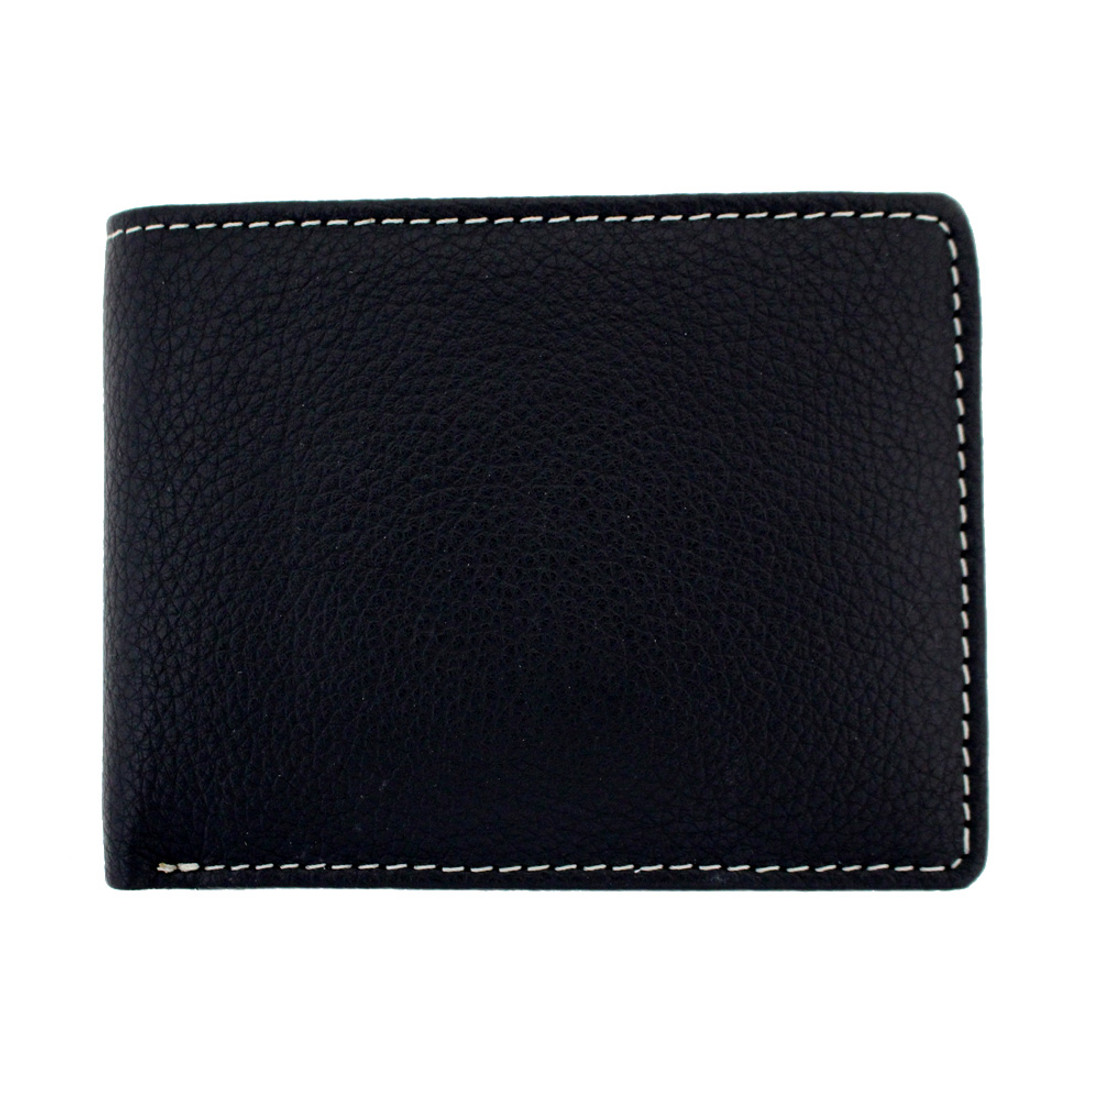 Black textured leather bi-fold with white stitching around edge.